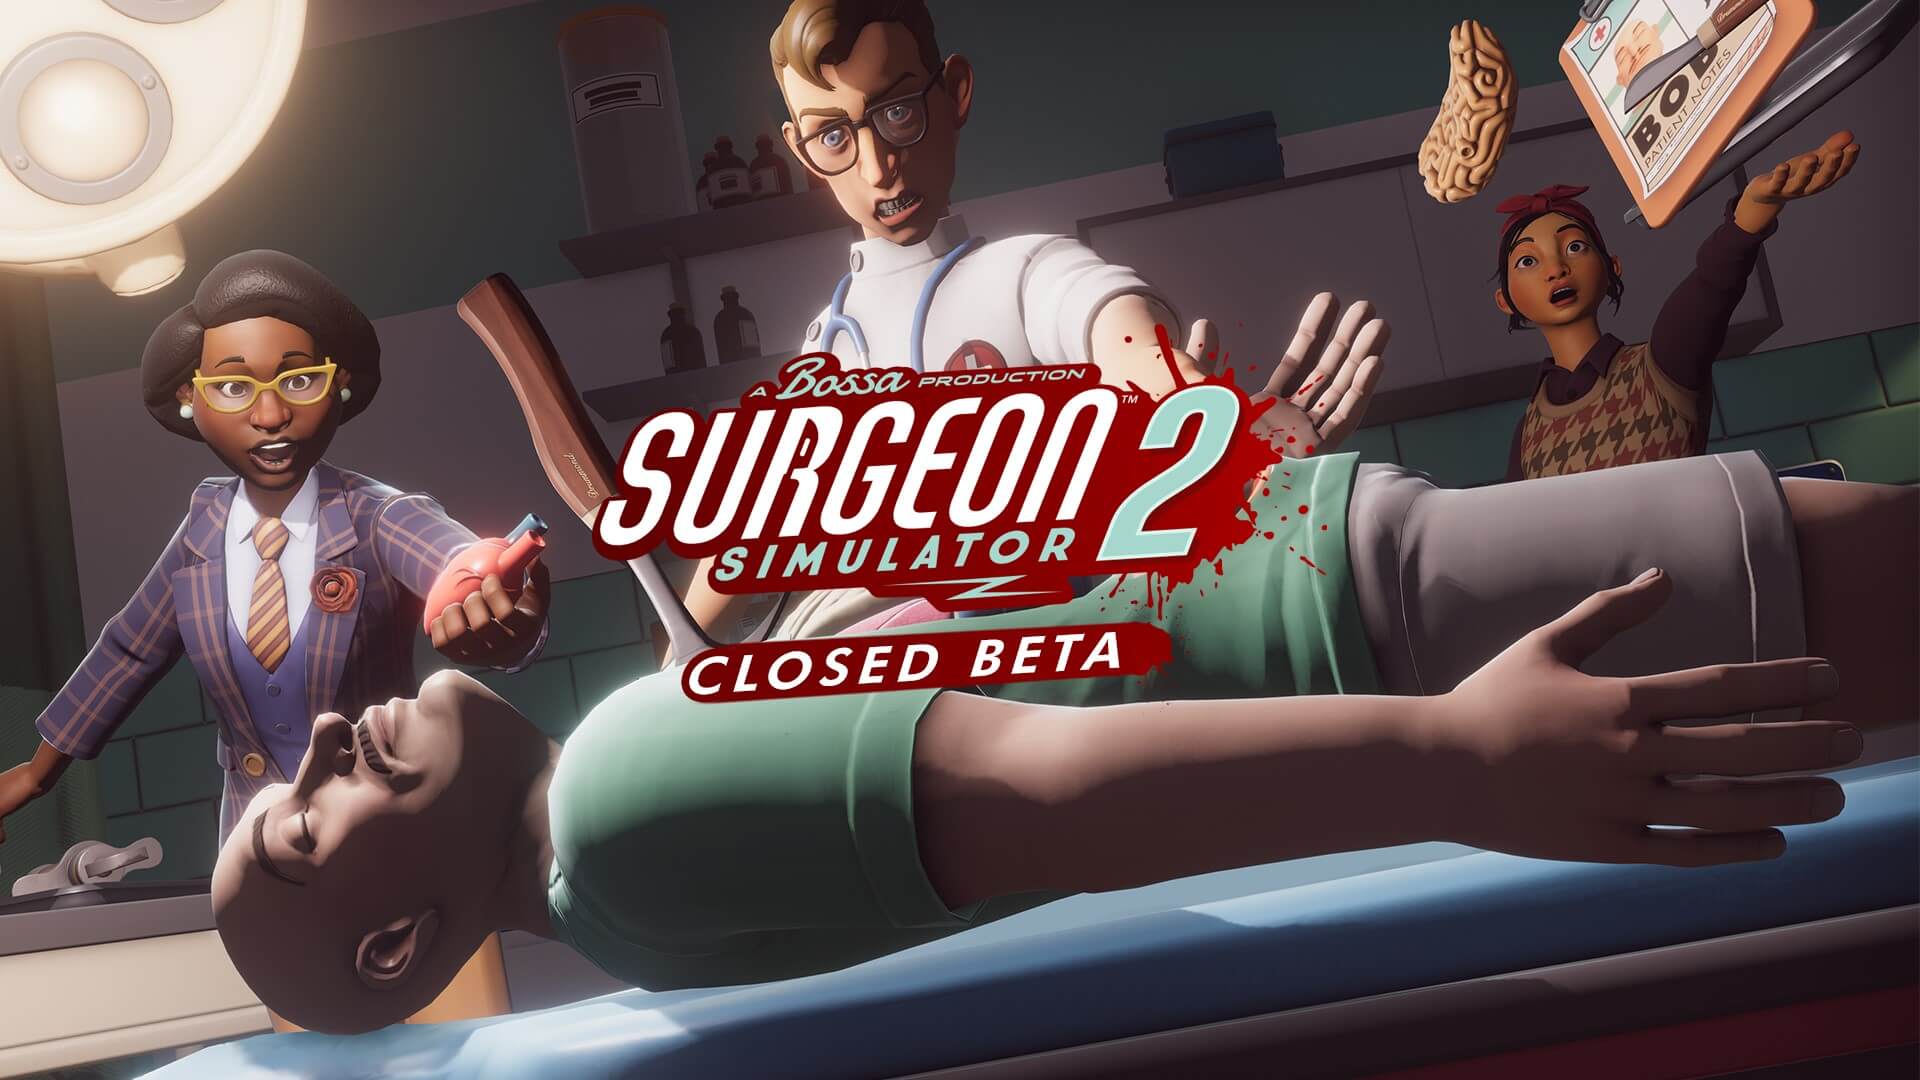 ihascupquake surgeon simulator animated